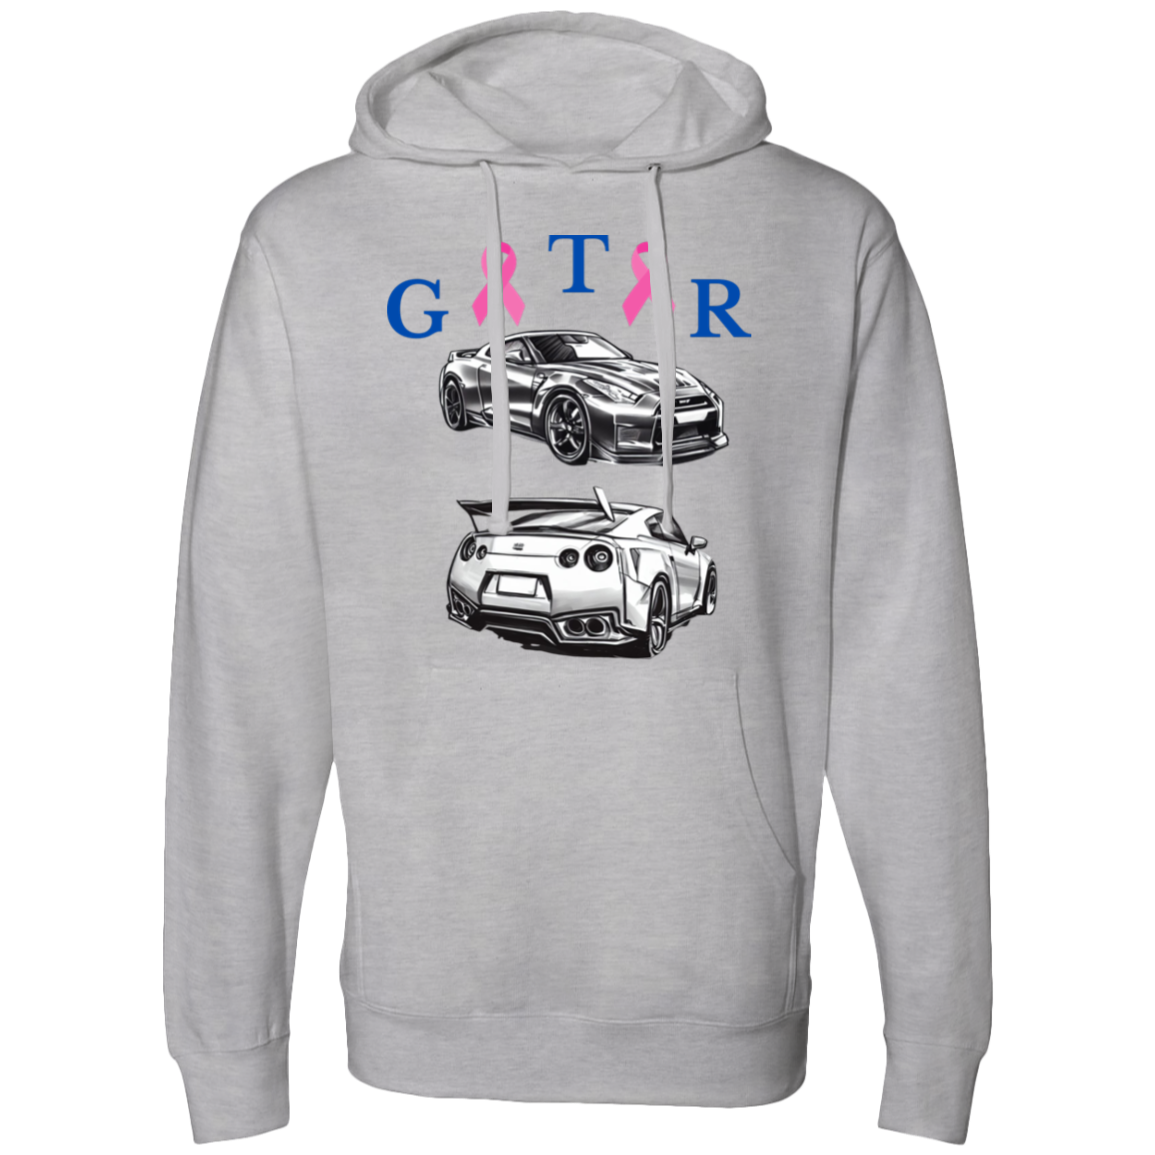 GTR Breast Cancer Hooded Sweatshirt